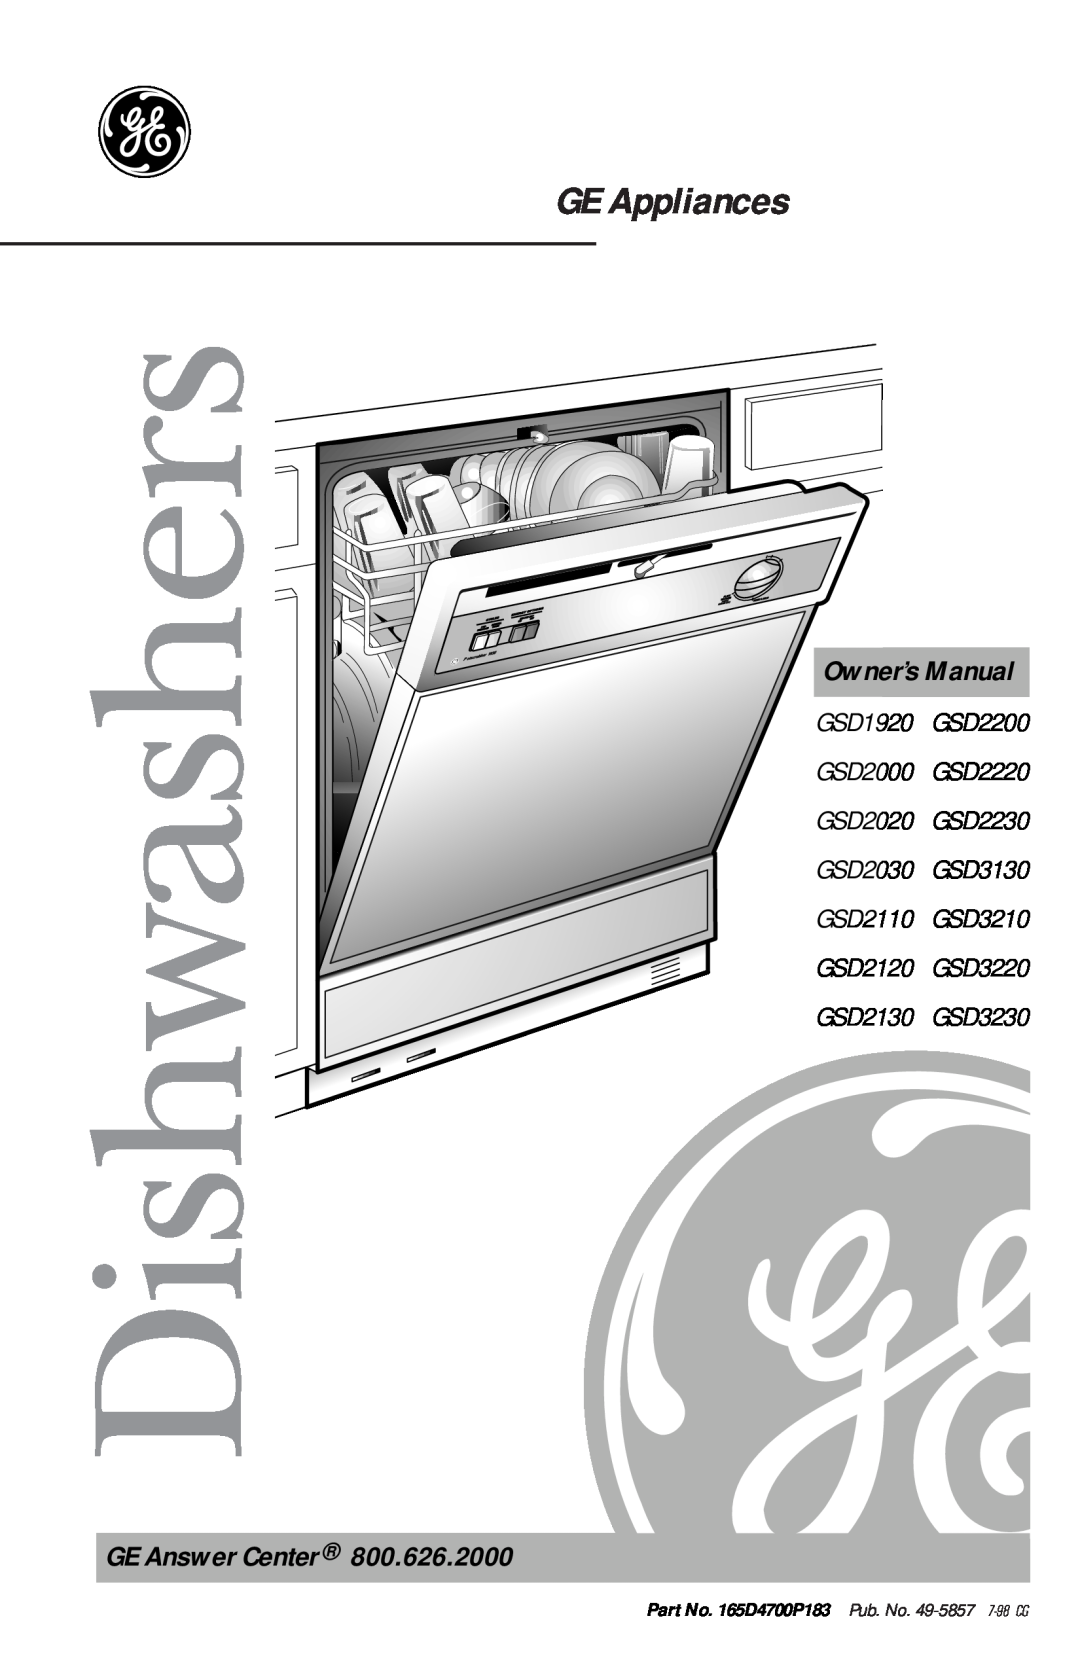 GE GSD2230 owner manual GE Appliances, GE Answer Center, Dishwashers, Part No. 165D4700P183 Pub. No. 49-5857-1 3-99 CG 